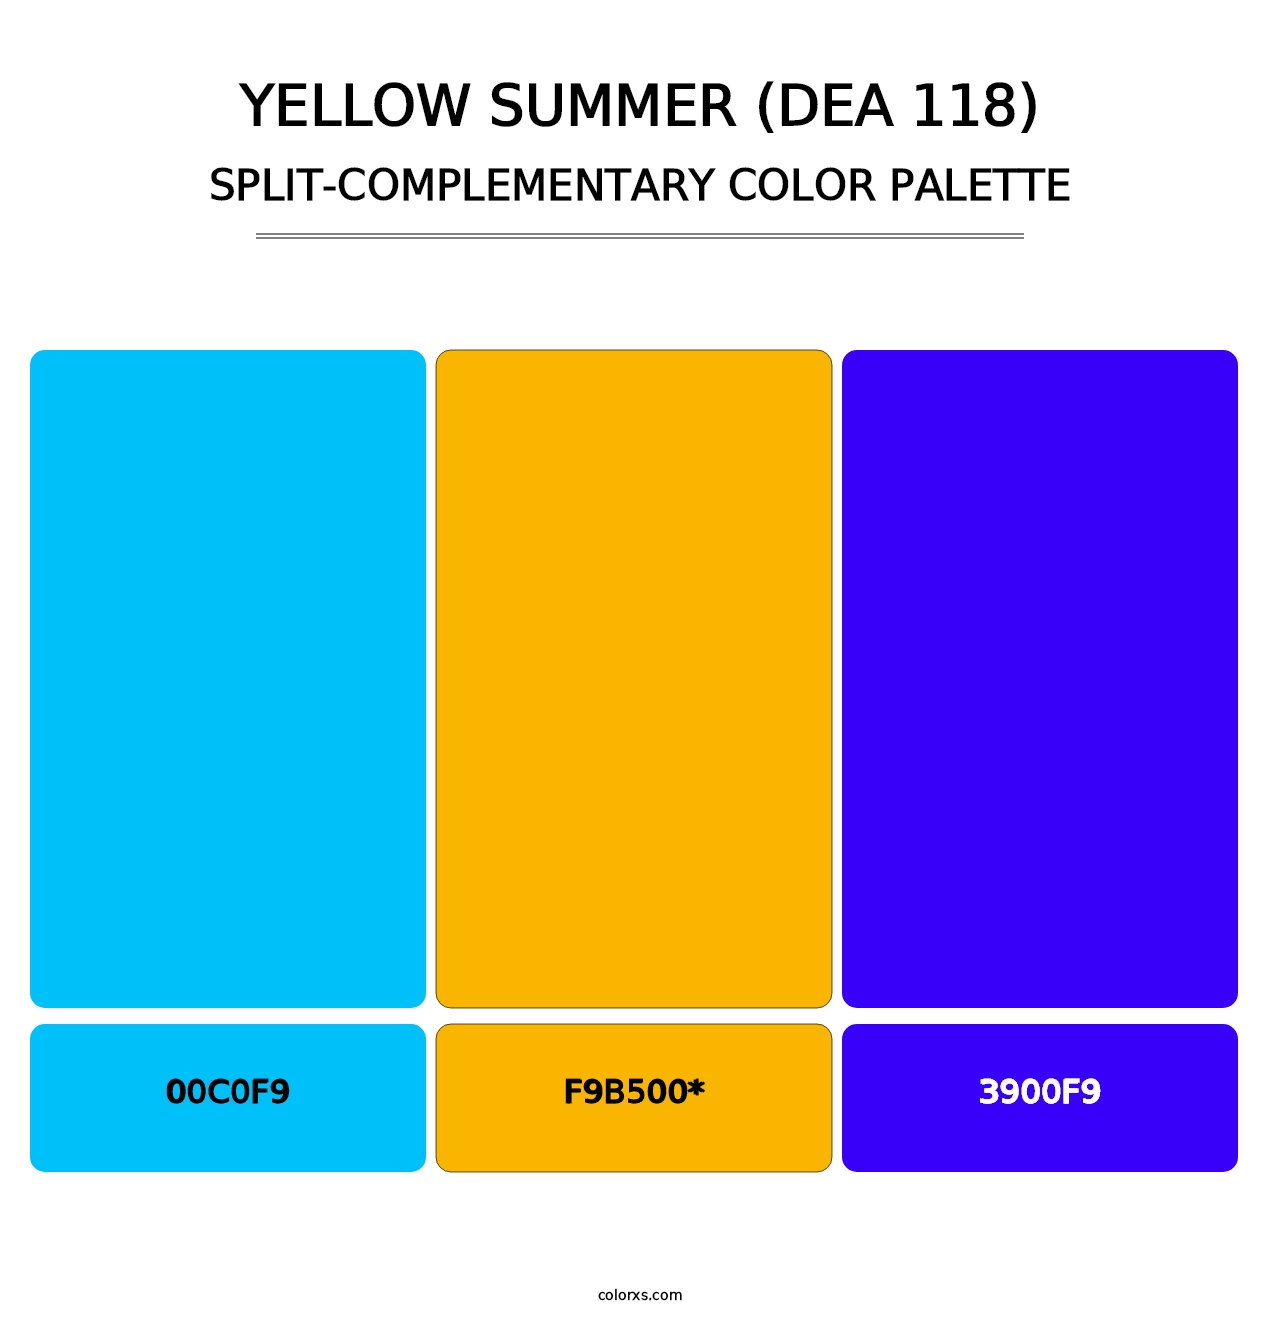 Yellow Summer (DEA 118) - Split-Complementary Color Palette